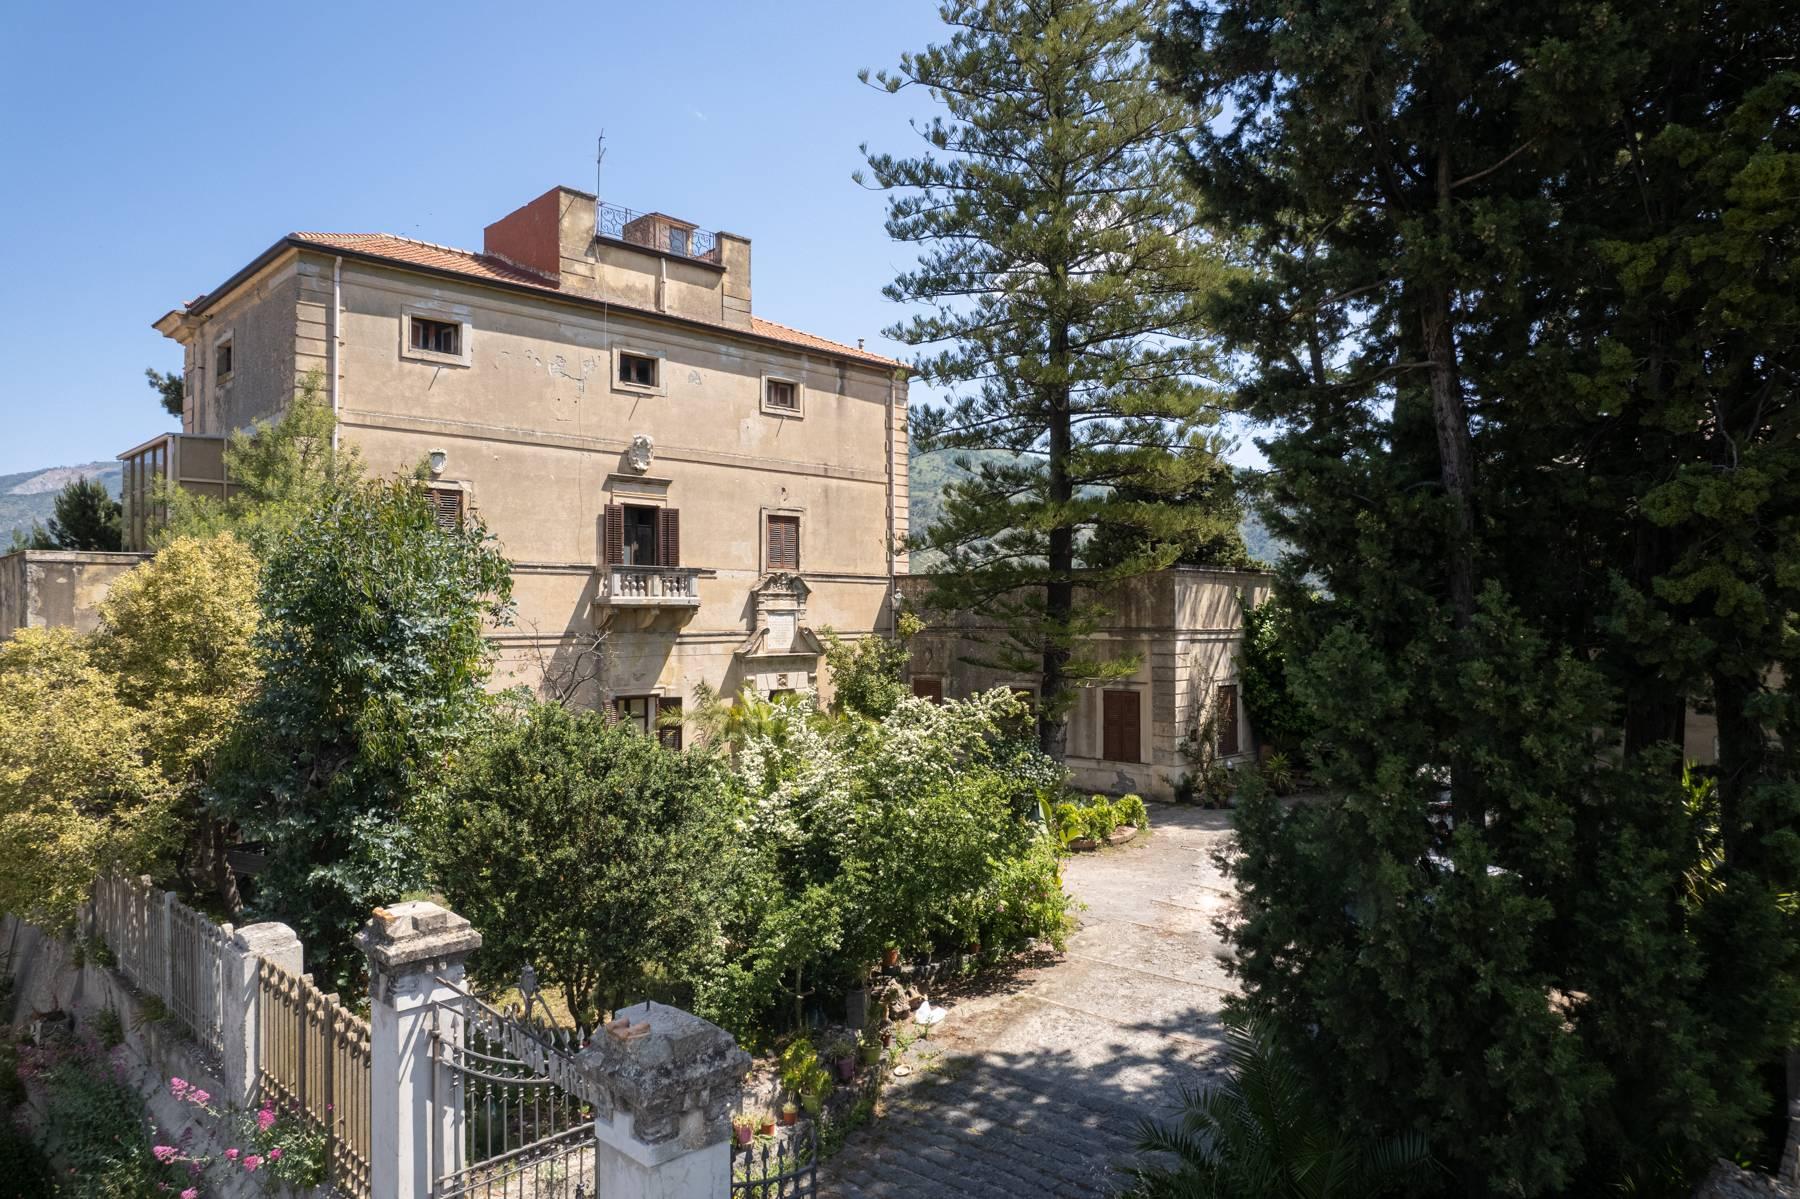 Historic mansion of Count Majorca Mortillaro in Francavilla - 2